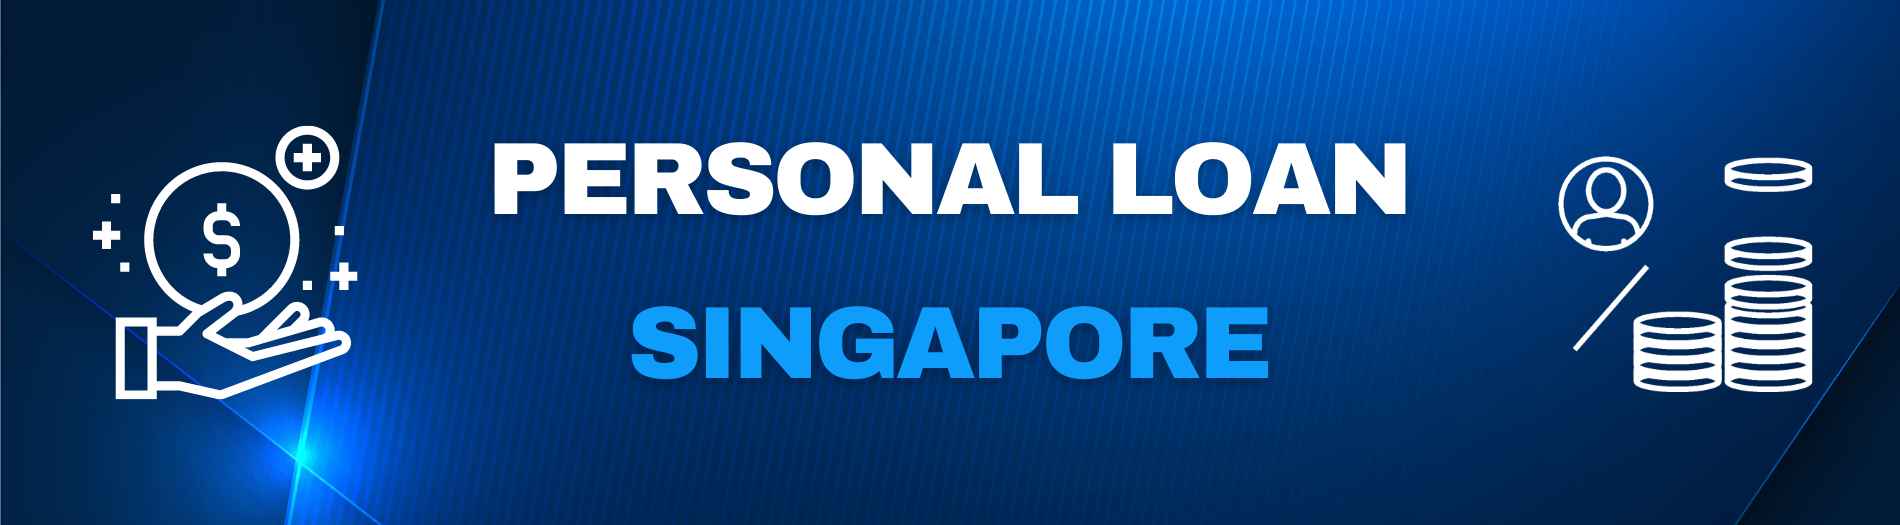 Personal Loan Singapore